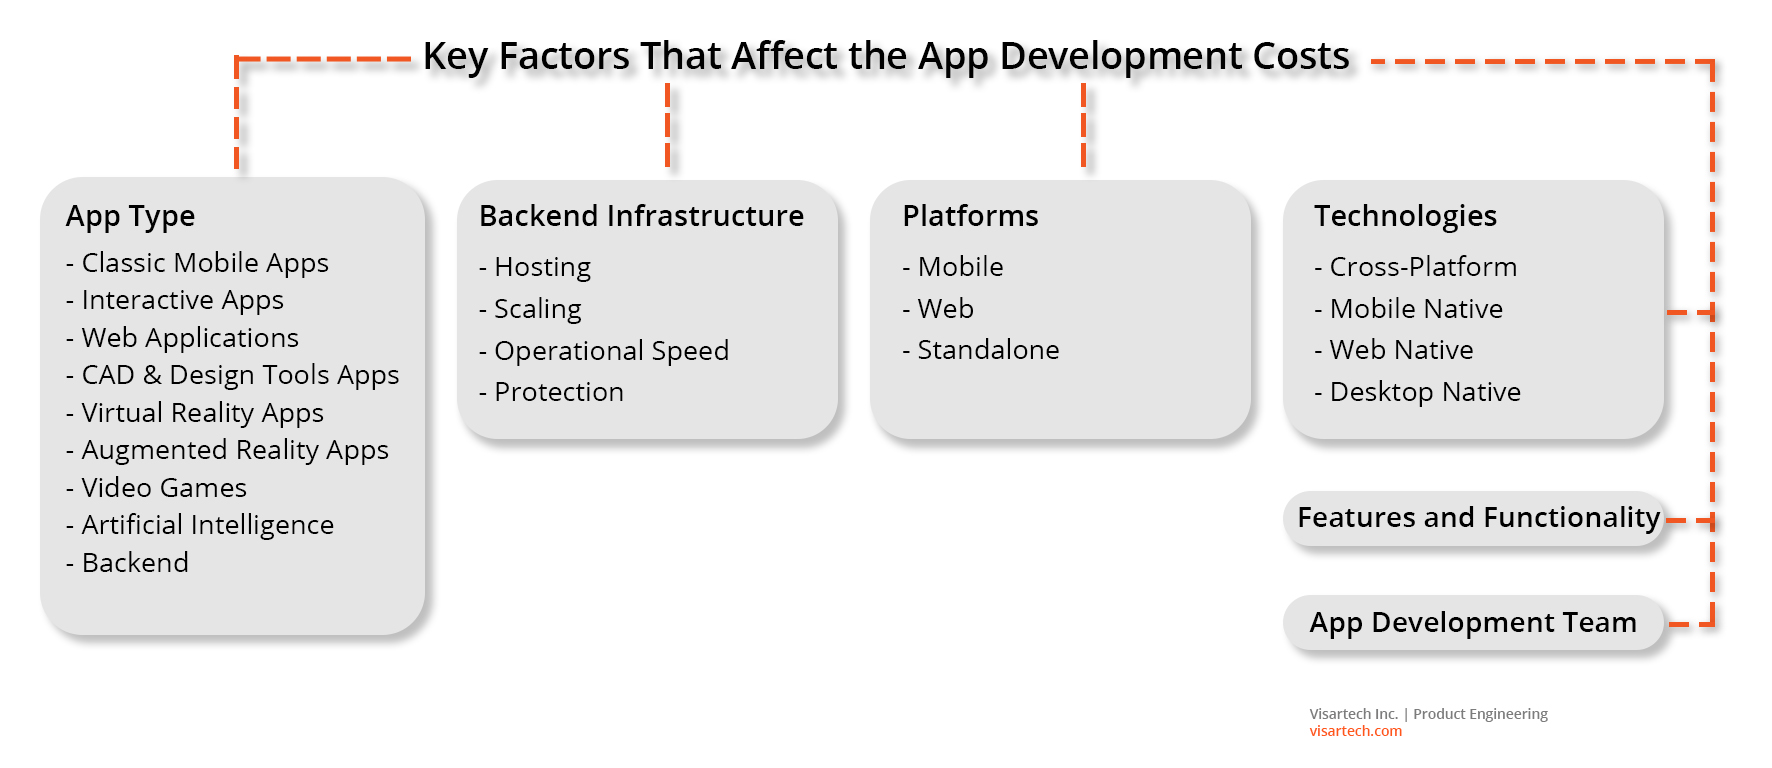 Key Factors That Affect the App Development Costs - Visartech Blog